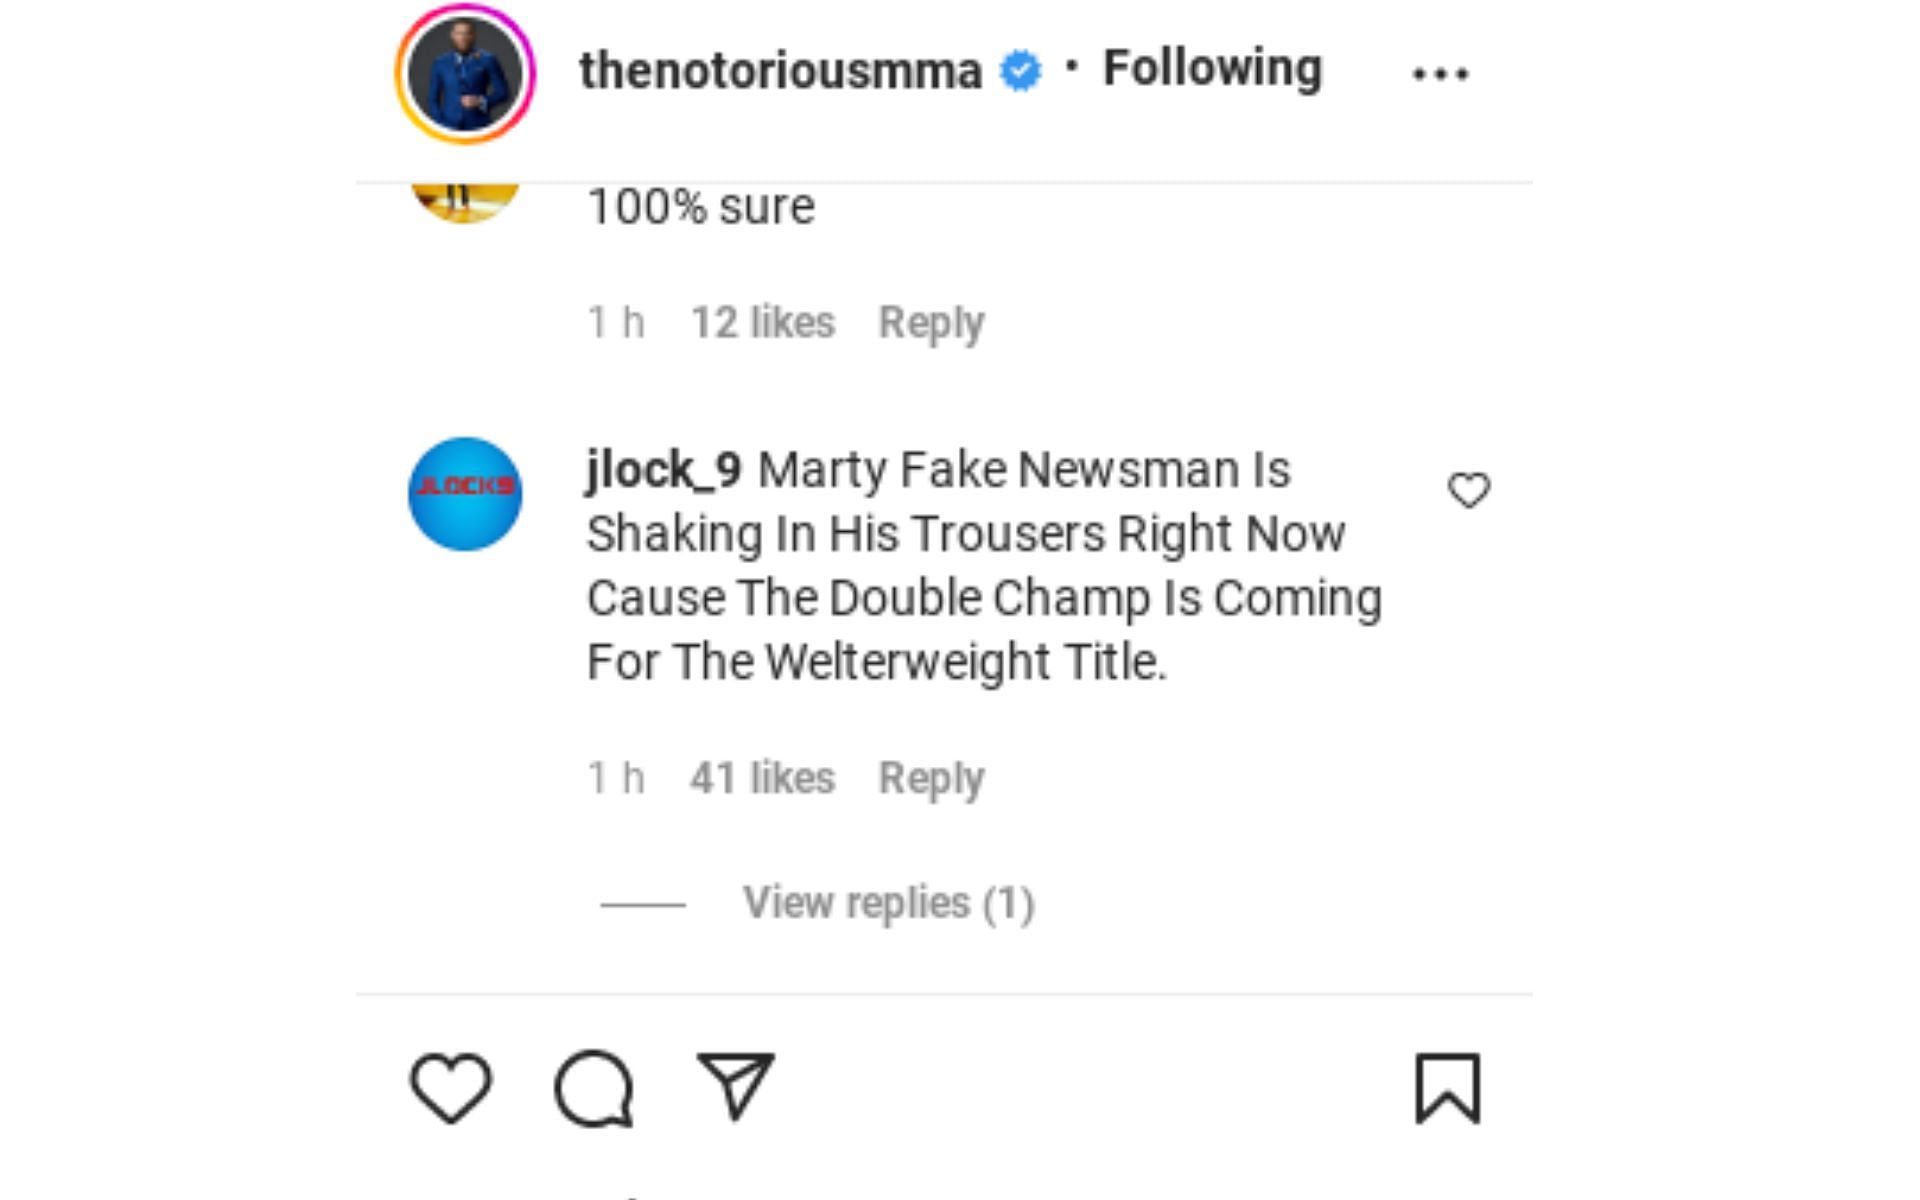 A fan comment, predicting Conor McGregor to defeat Kamaru Usman